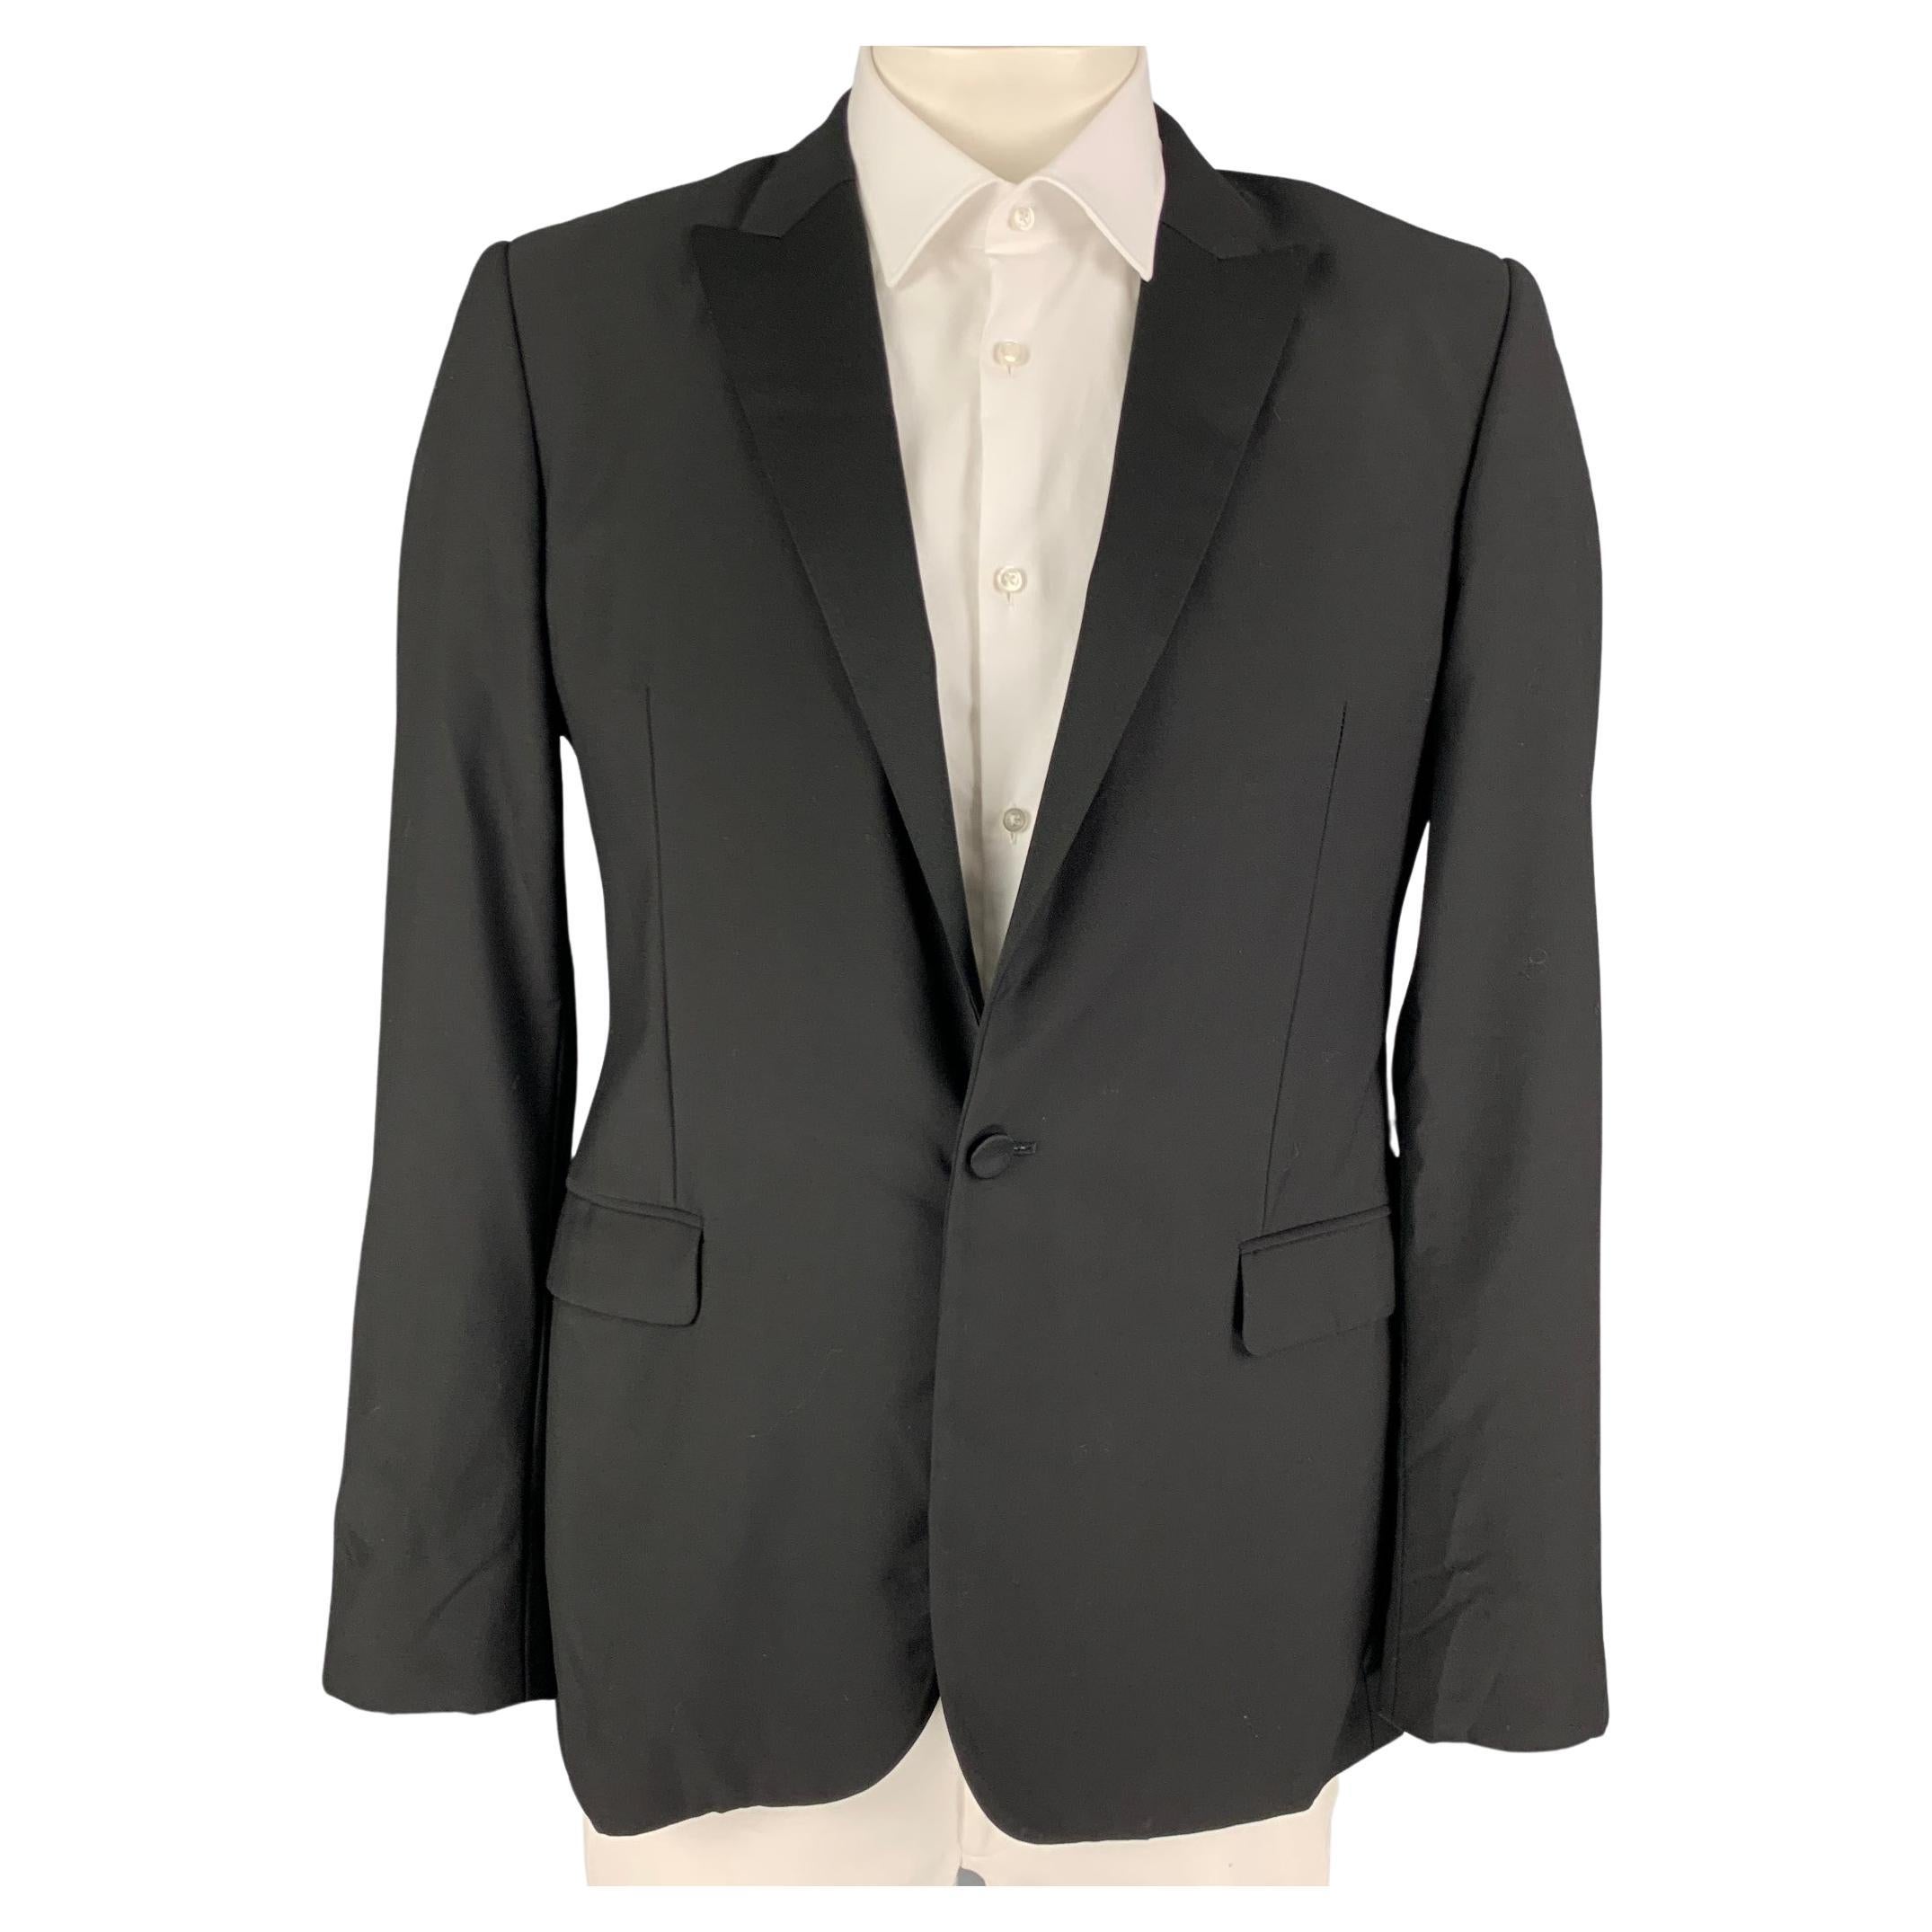 CALVIN KLEIN COLLECTION Size 41 Black Wool Tuxedo Sport Coat